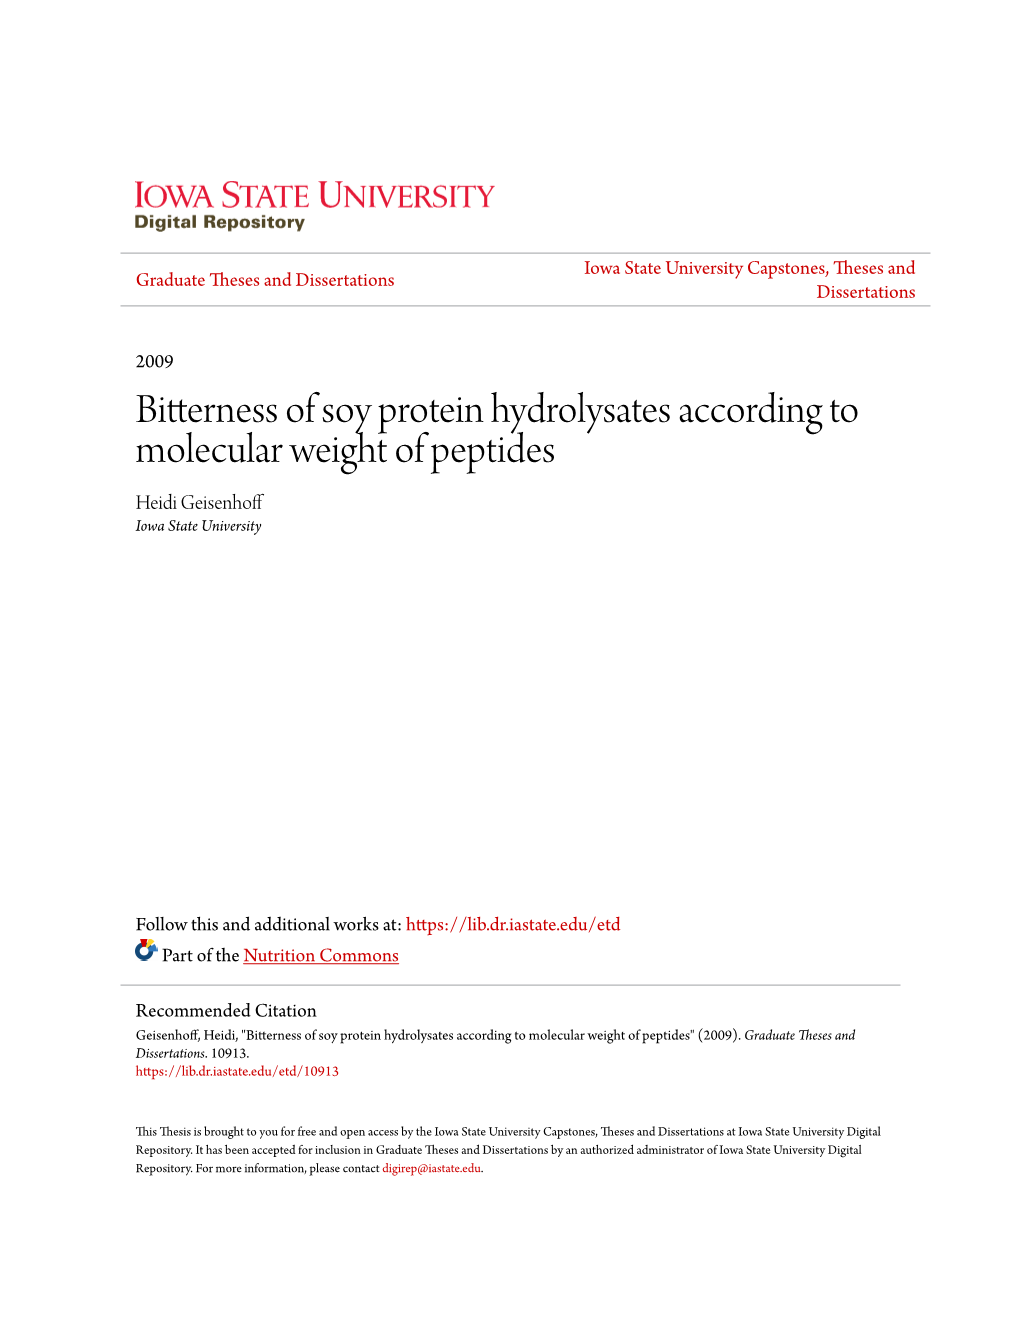 Bitterness of Soy Protein Hydrolysates According to Molecular Weight of Peptides Heidi Geisenhoff Iowa State University